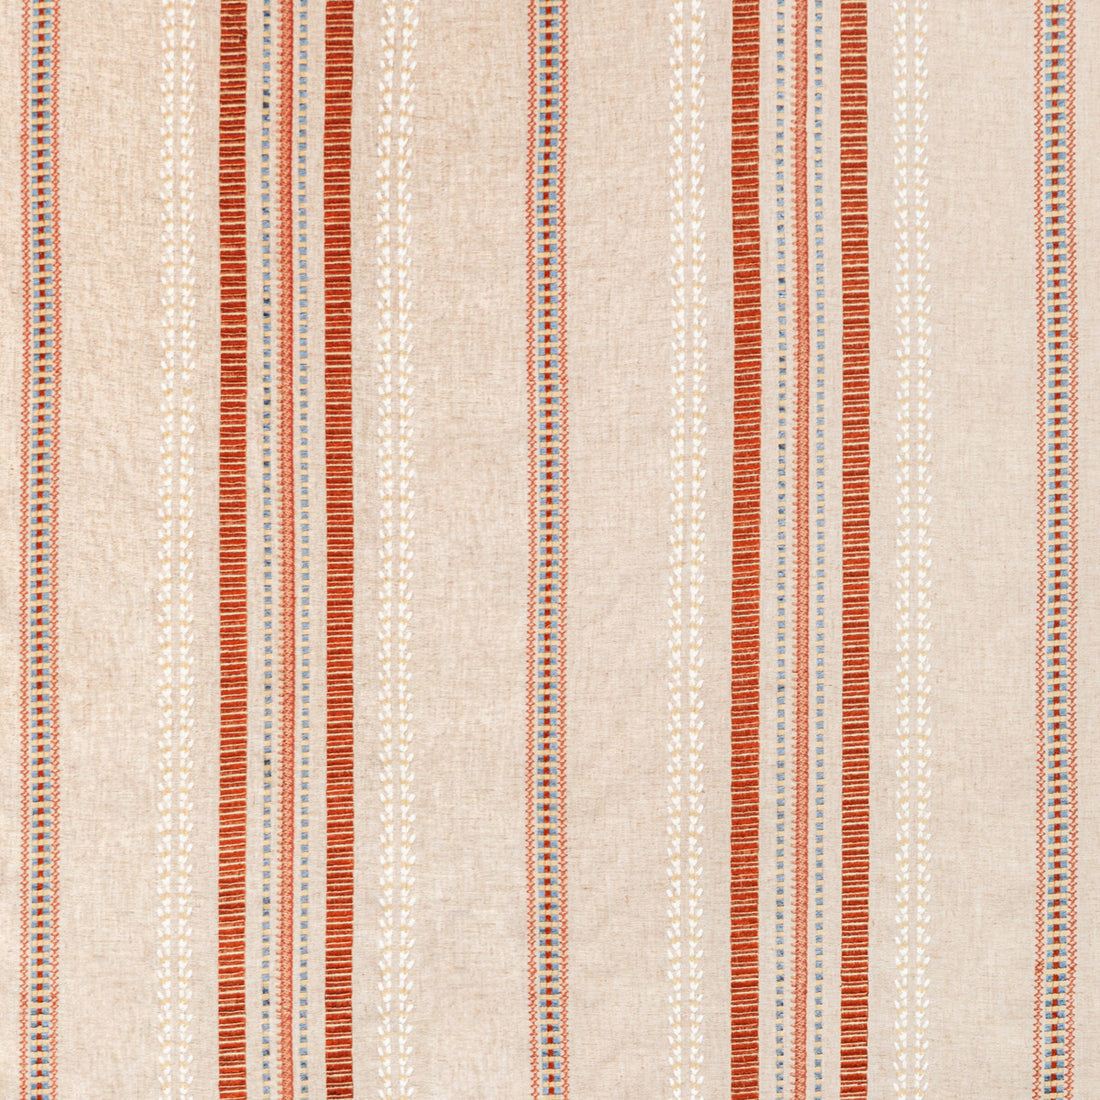 Nautique Emb fabric in rust/blue color - pattern 2020223.24.0 - by Lee Jofa in the Oscar De La Renta IV collection